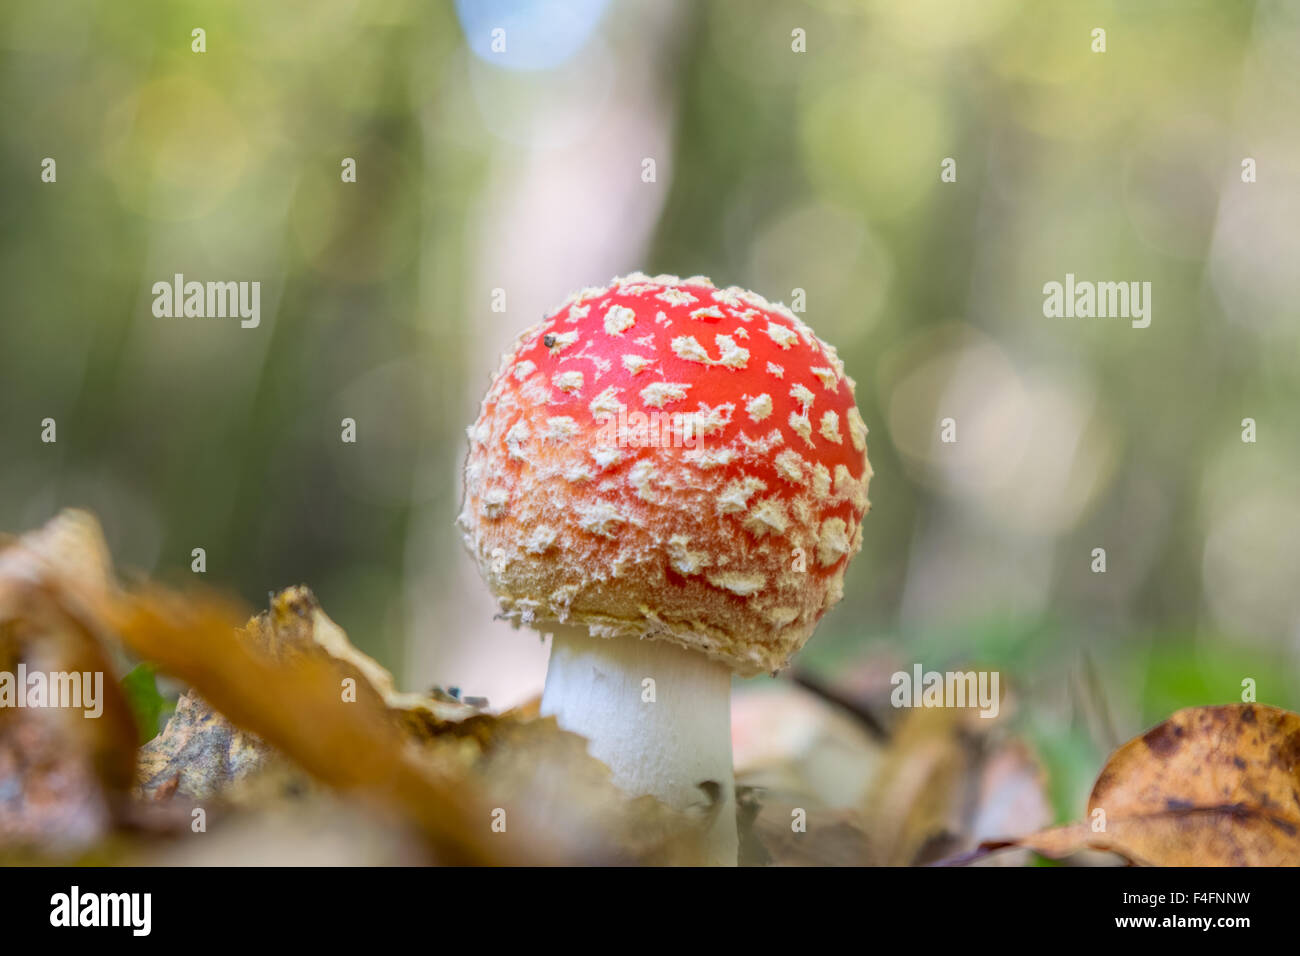 Amanita mushroom in the forest Stock Photo